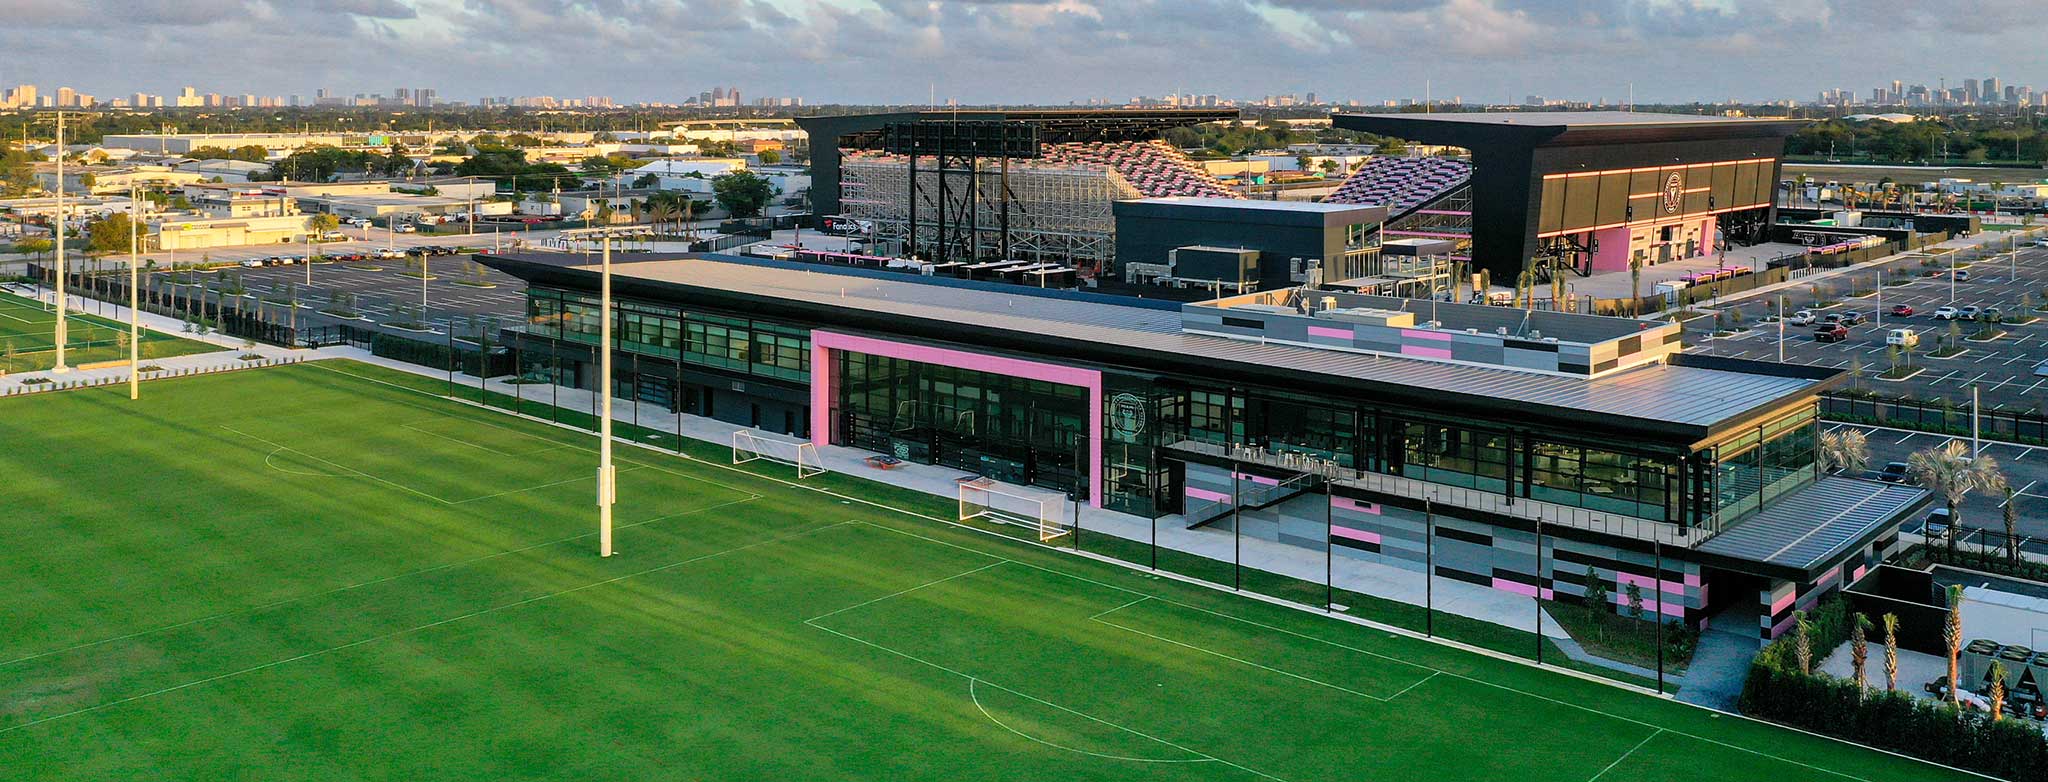 Inter Miami CF Lockhart Stadium and Training Facility